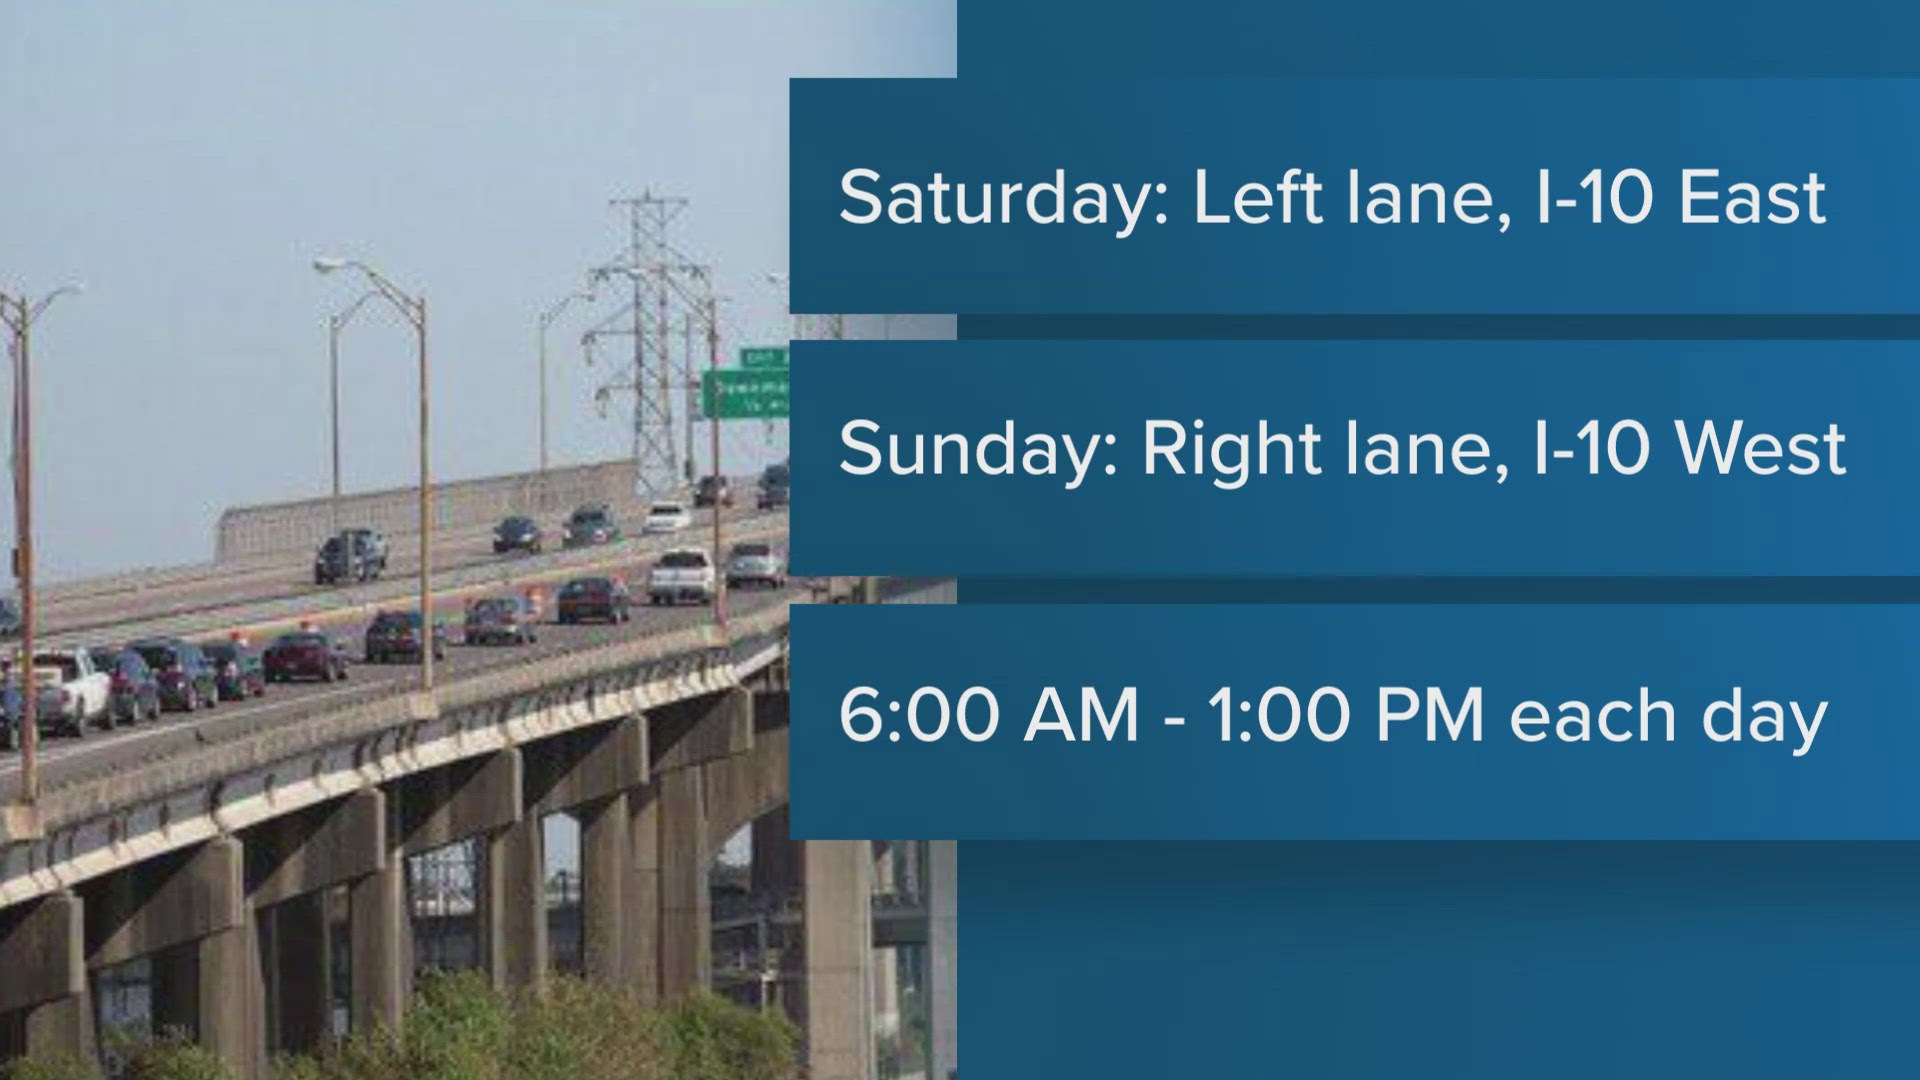 Lane closures will begin this weekend starting Saturday Apr. 26.